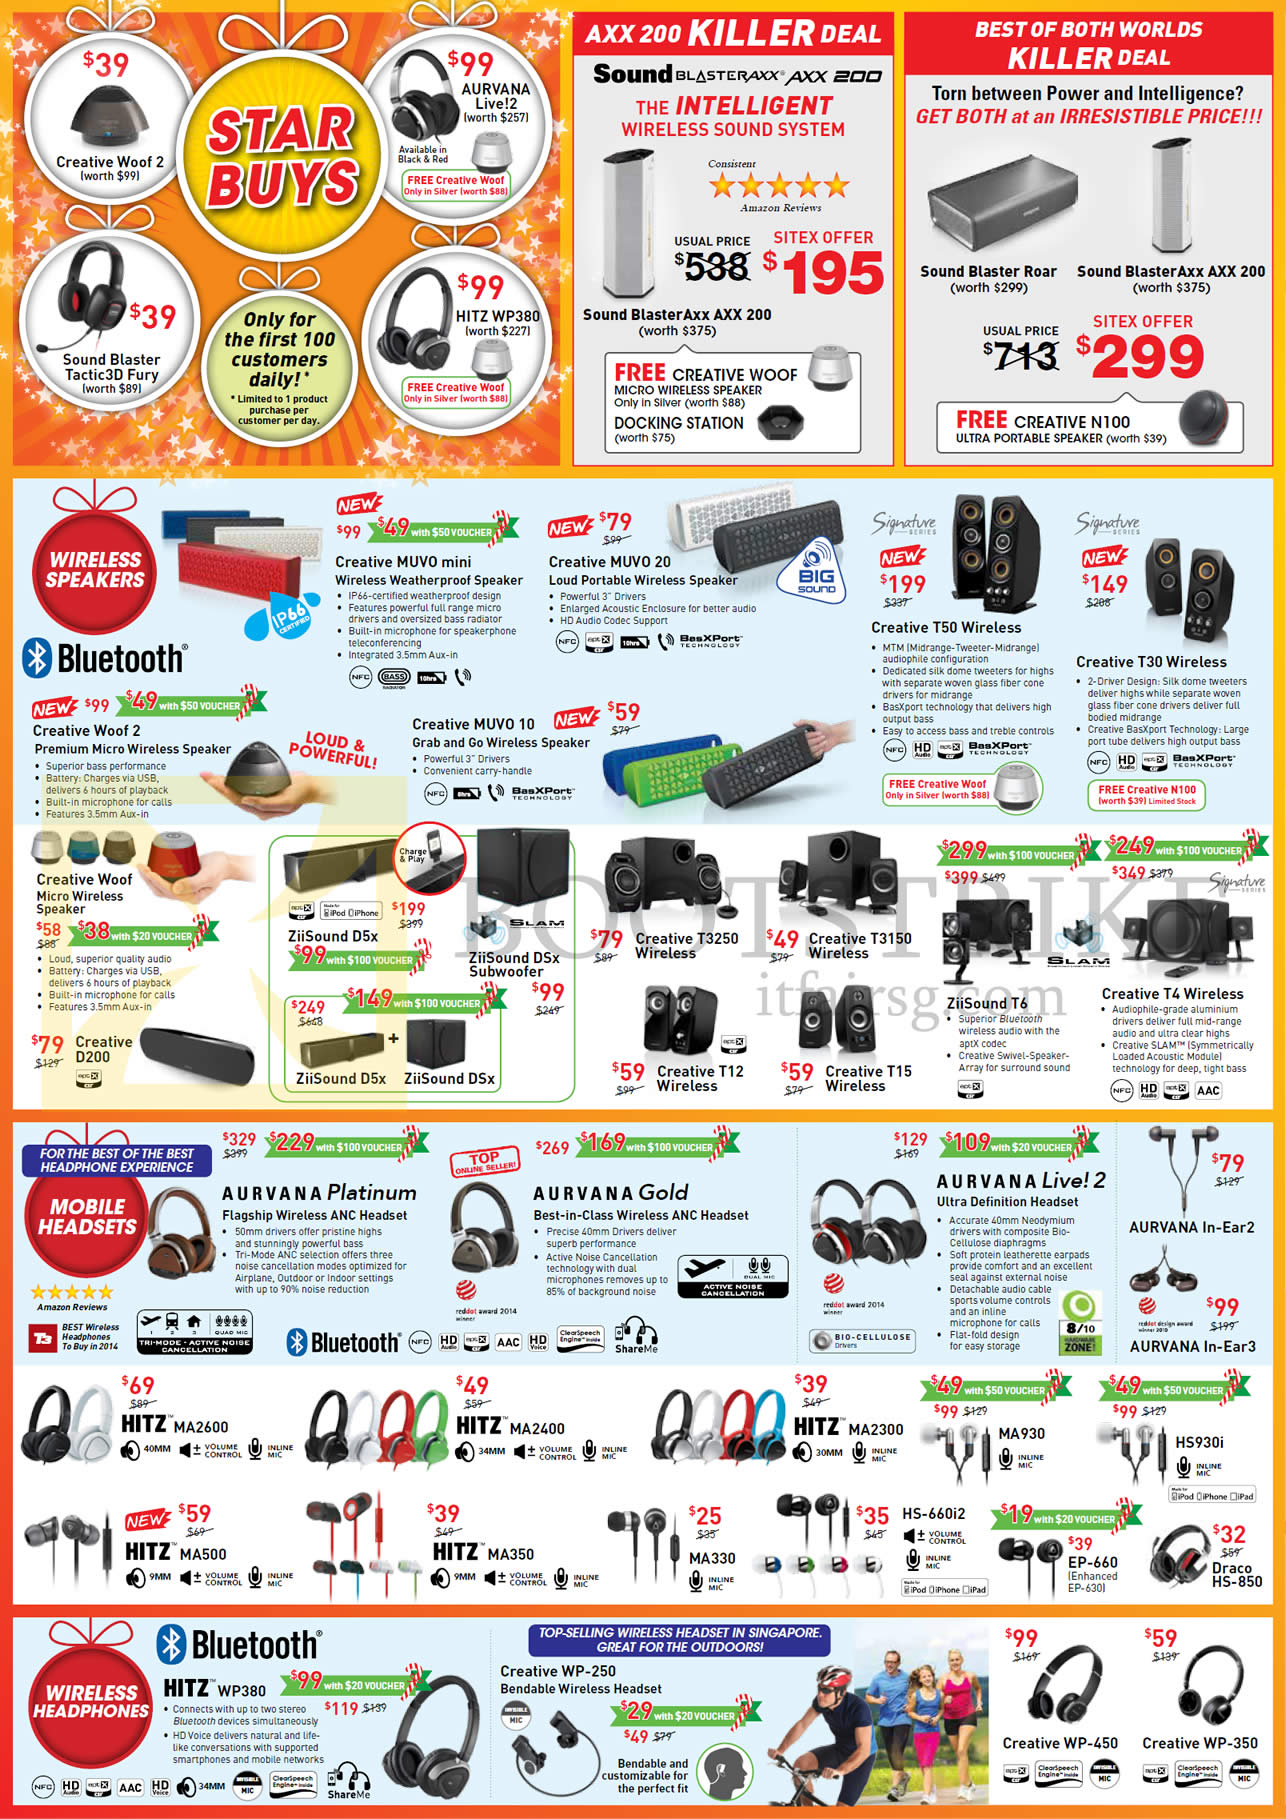 SITEX 2014 price list image brochure of Creative Wireless Speakers, Headsets, Headphones, Woof 2, Muvo Mini, Muvo 10, Muvo 20, T3250, Aurvana Platinum, Gold, Live 2, Hitz MA2600, MA2400, MA350, WP380, WP-250